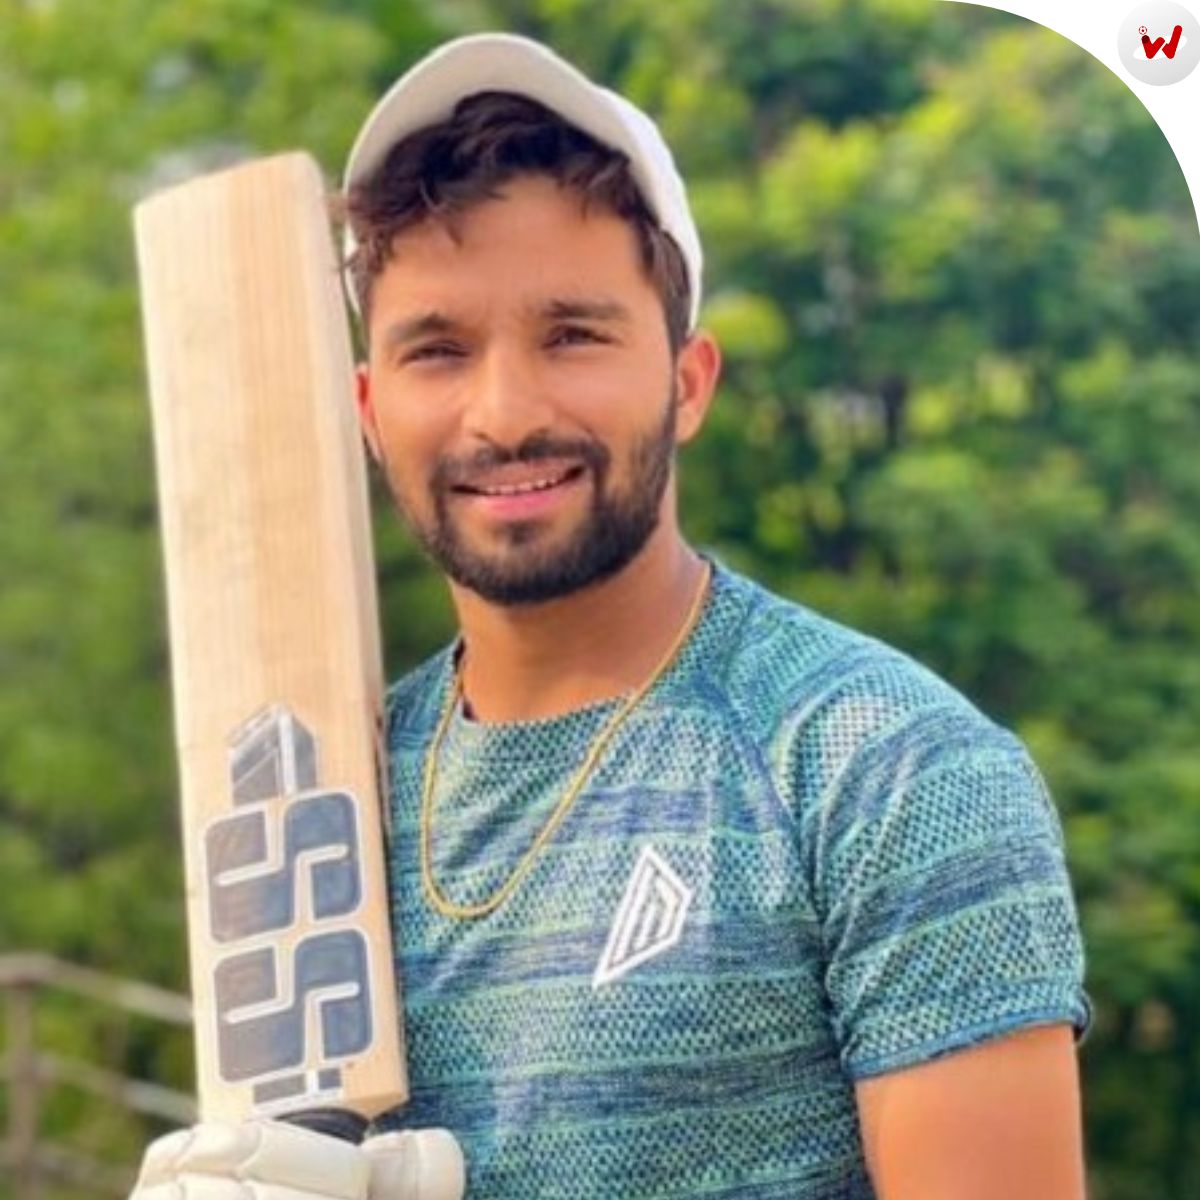 Rajat Patidar (Cricketer) Age, Wiki, Height, Biography, Career & More